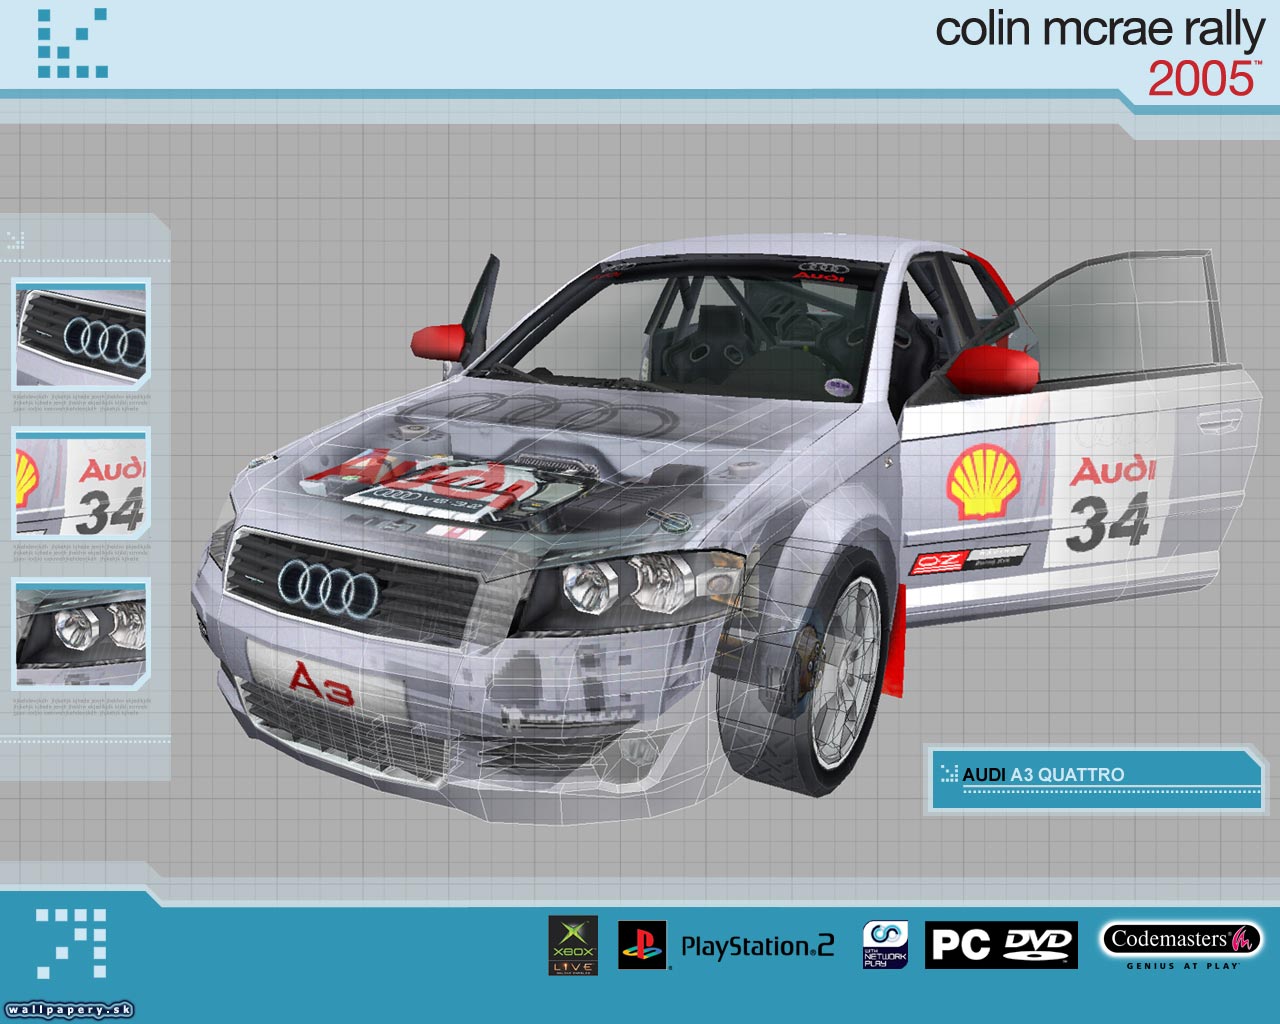 Colin McRae Rally 2005 - wallpaper 1